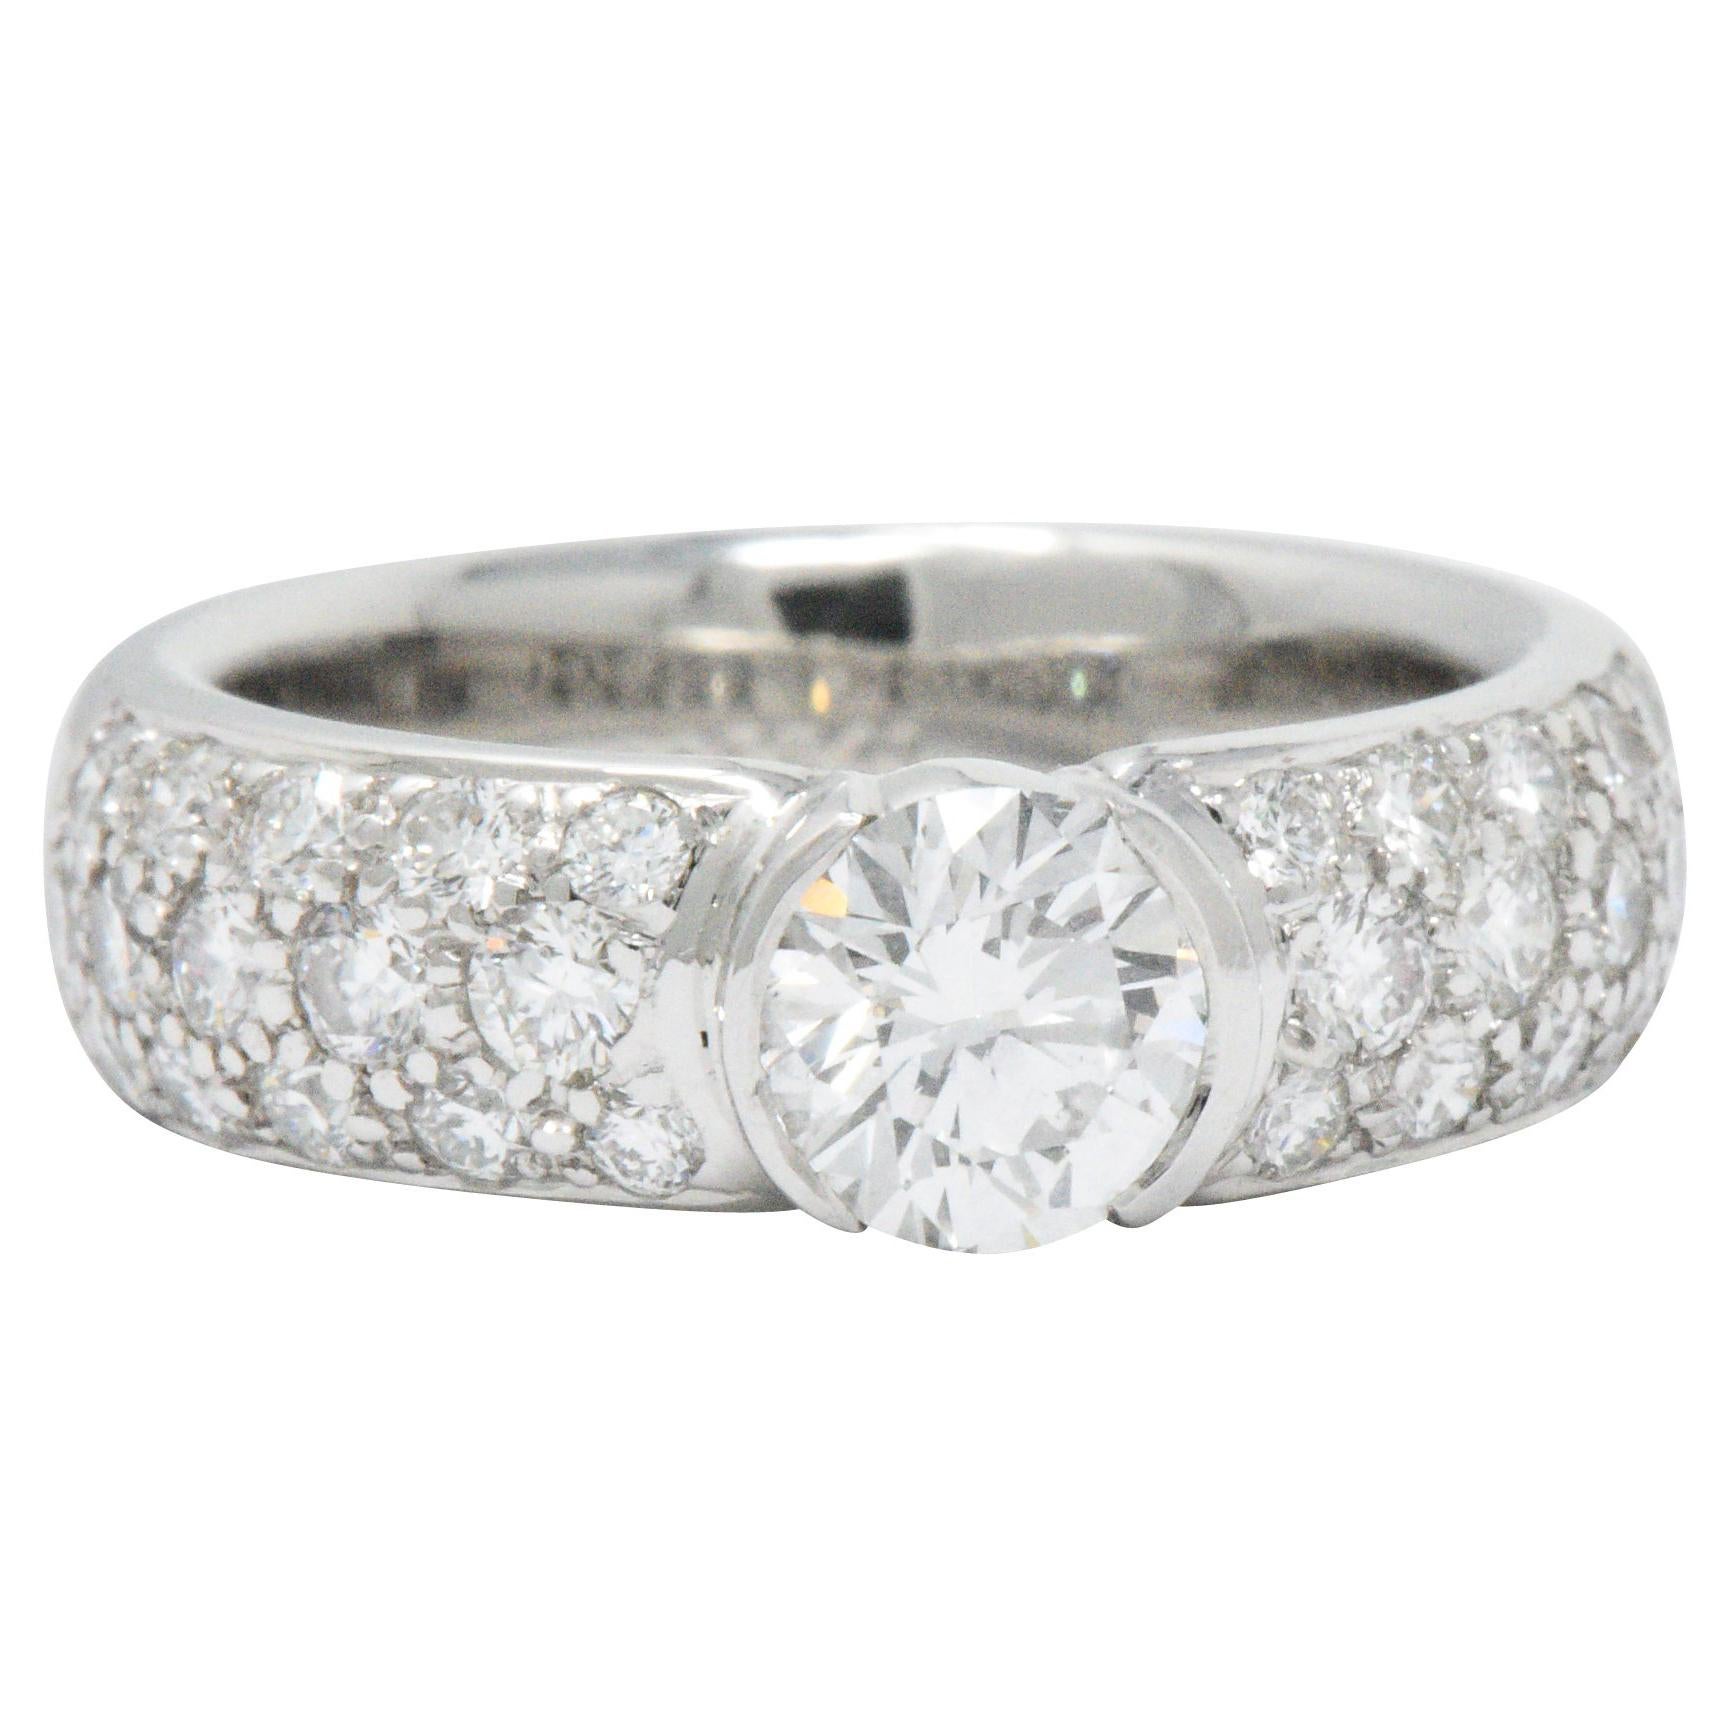 Tiffany & Co. 1.48 Carat Diamond and Platinum Engagement Ring GIA